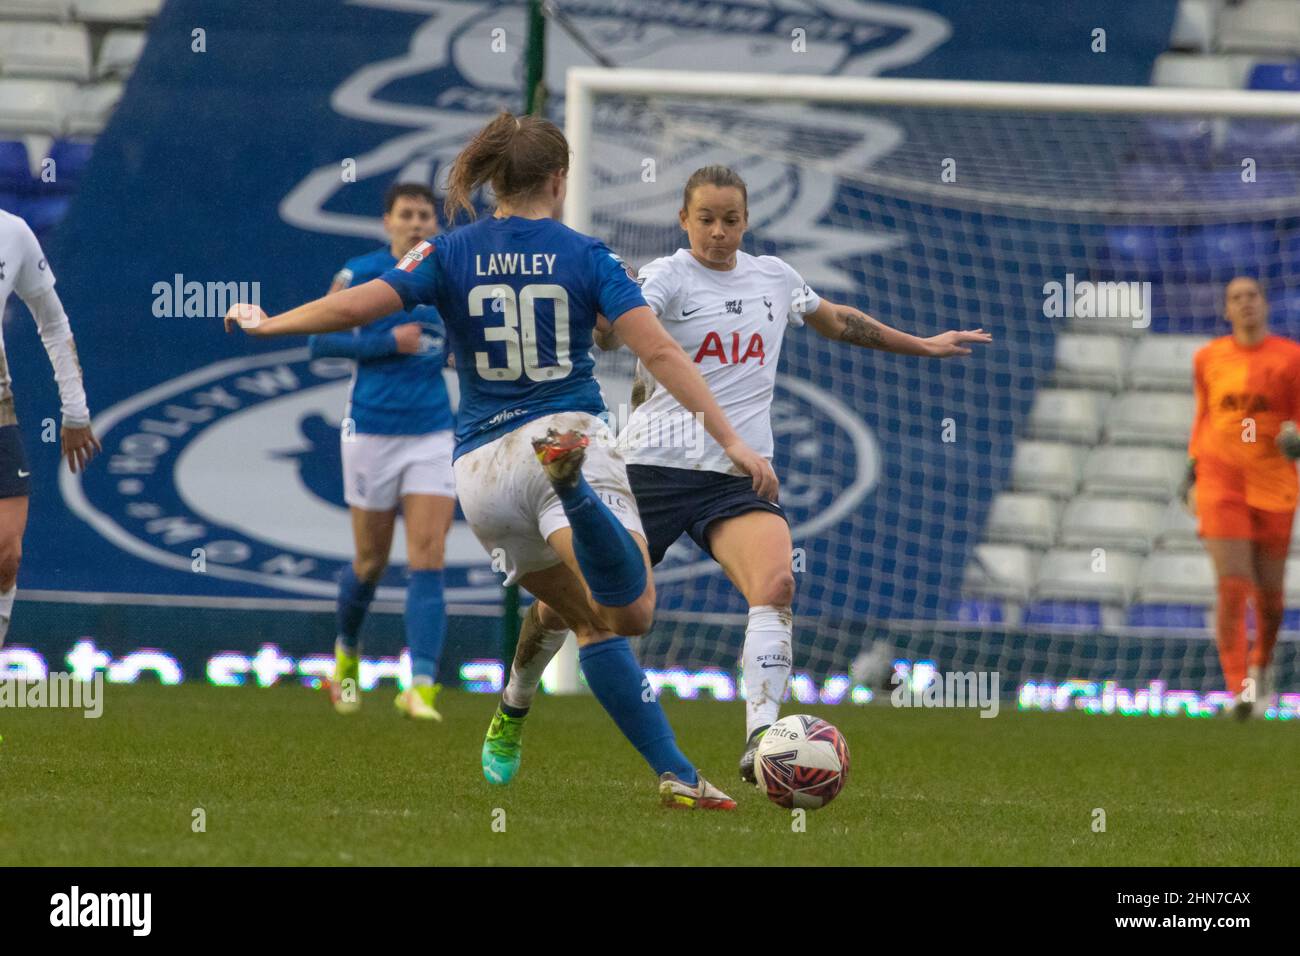 Big challenge between Gemma Lawley of Birmingham City & Ria Percival of Tottenham Hotspur Stock Photo